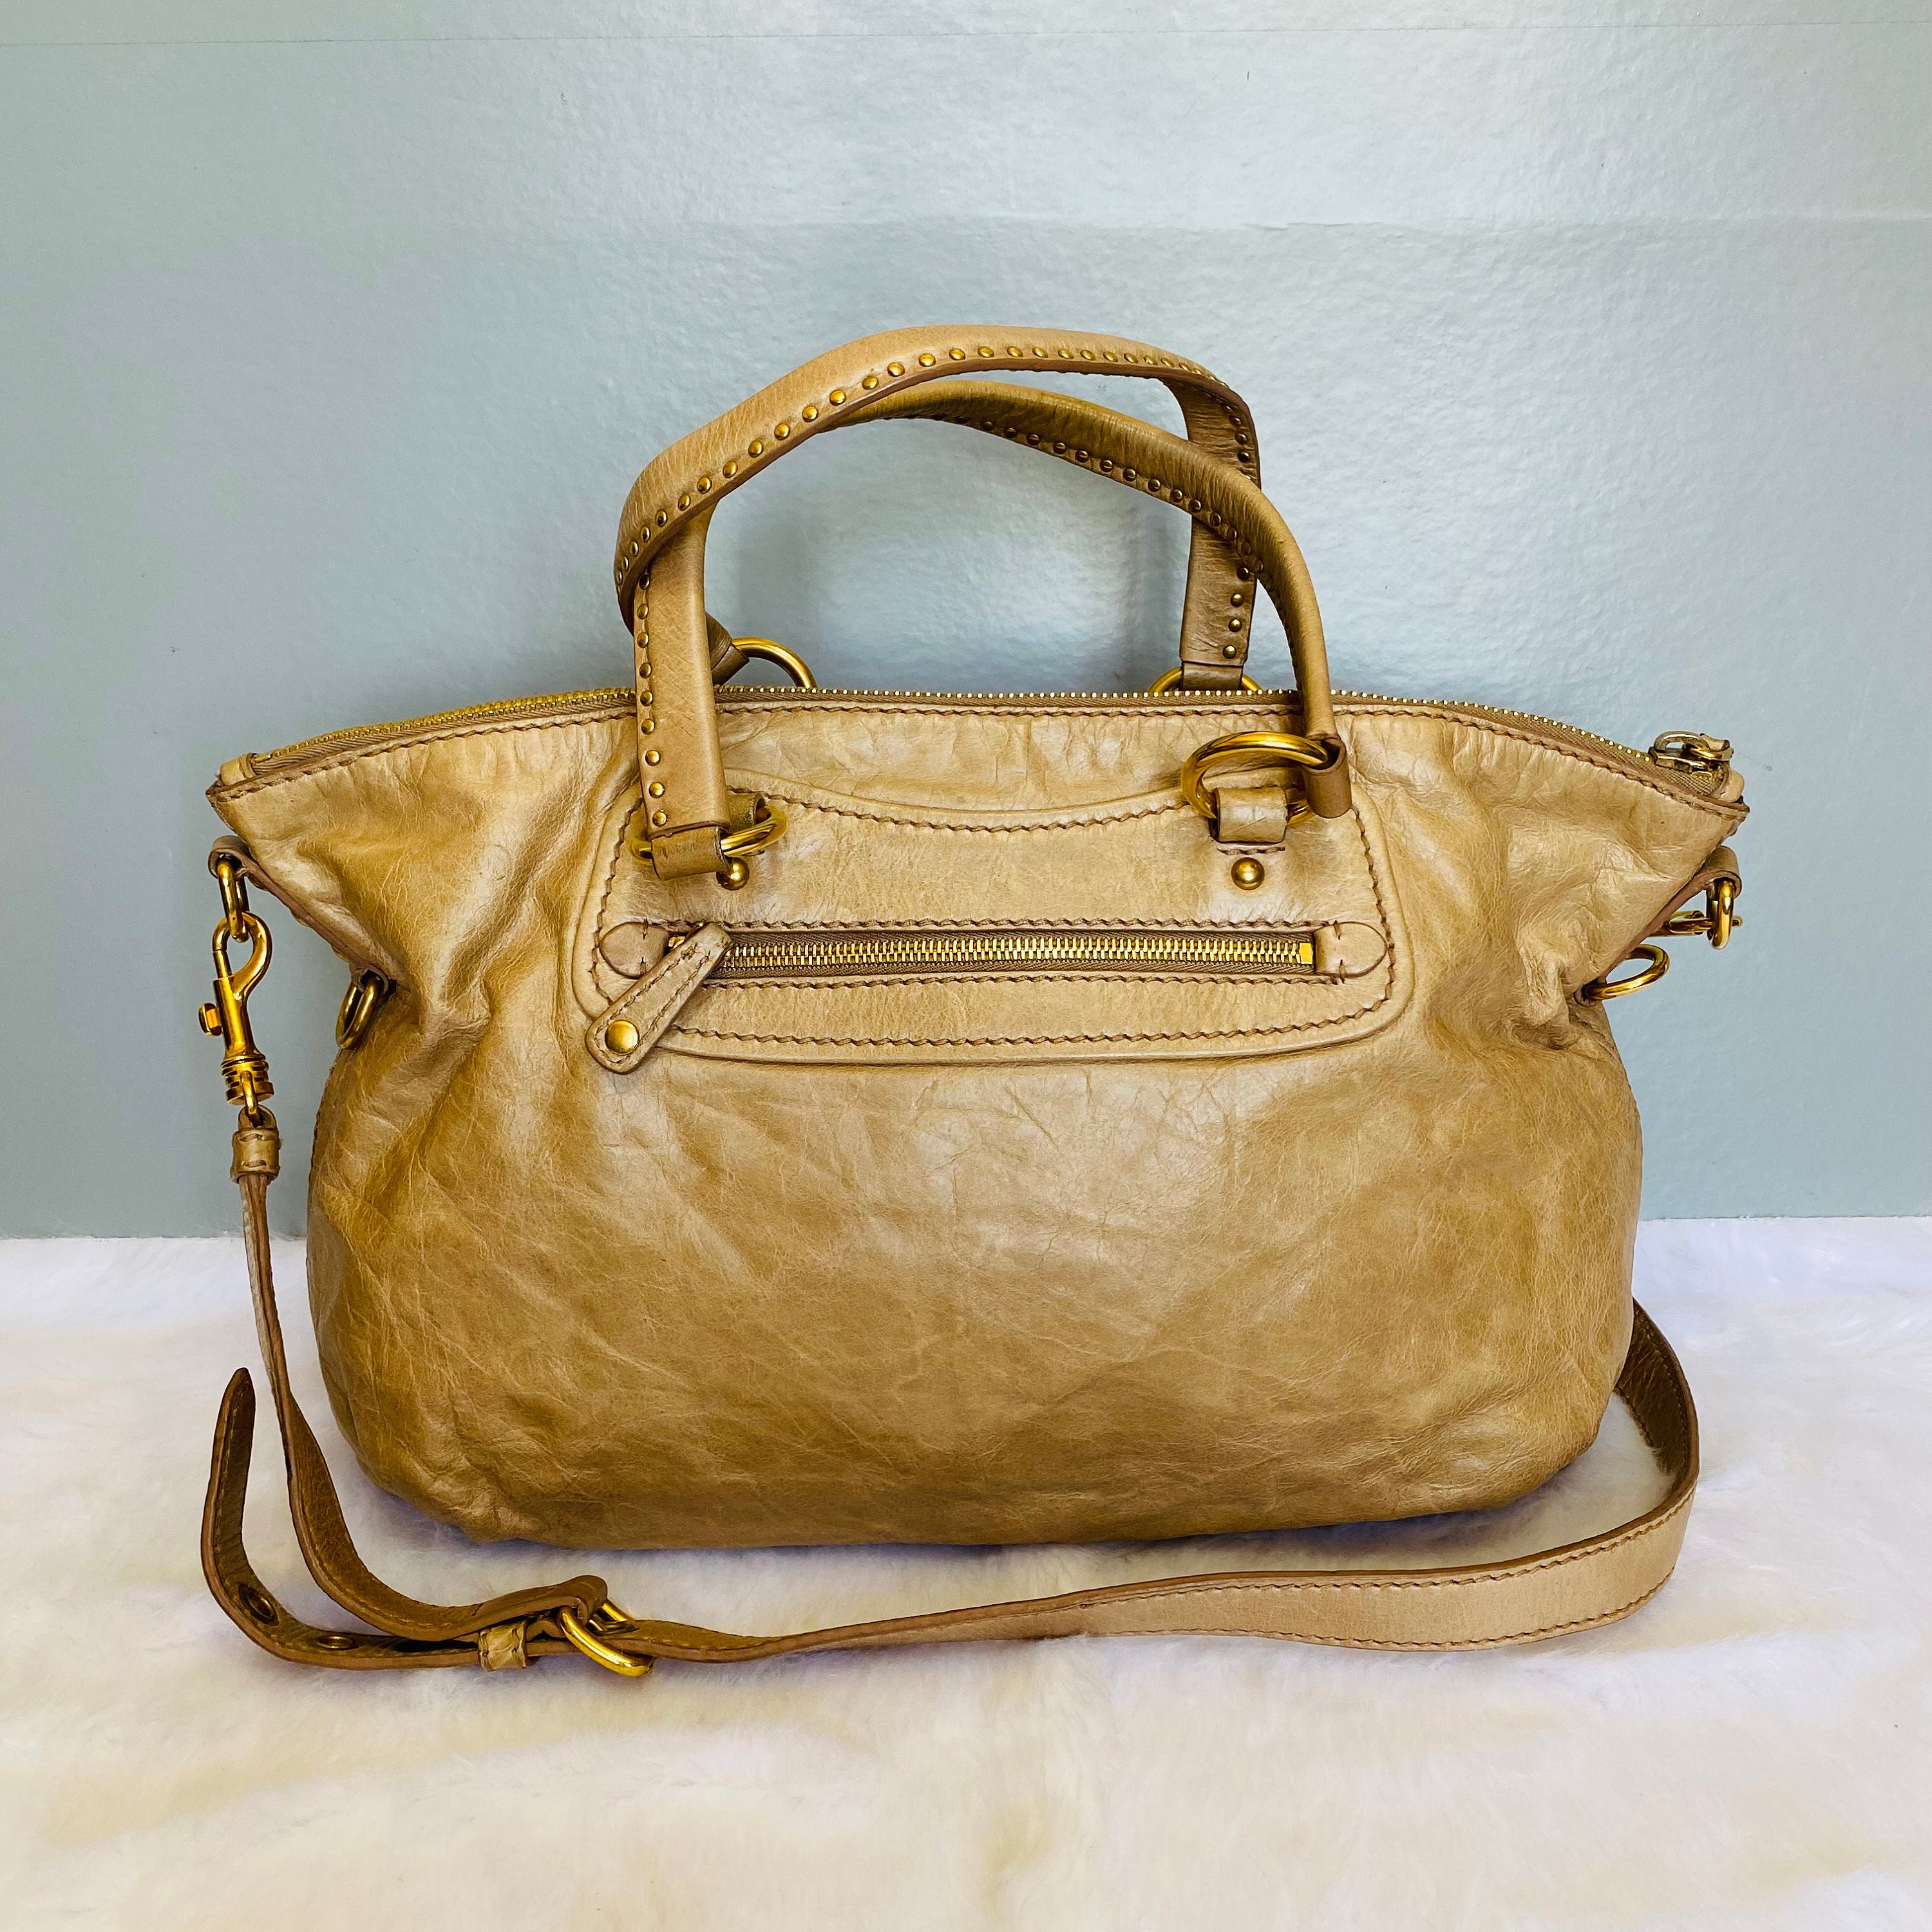 Vitello leather handbag Miu Miu Pink in Leather - 28866726